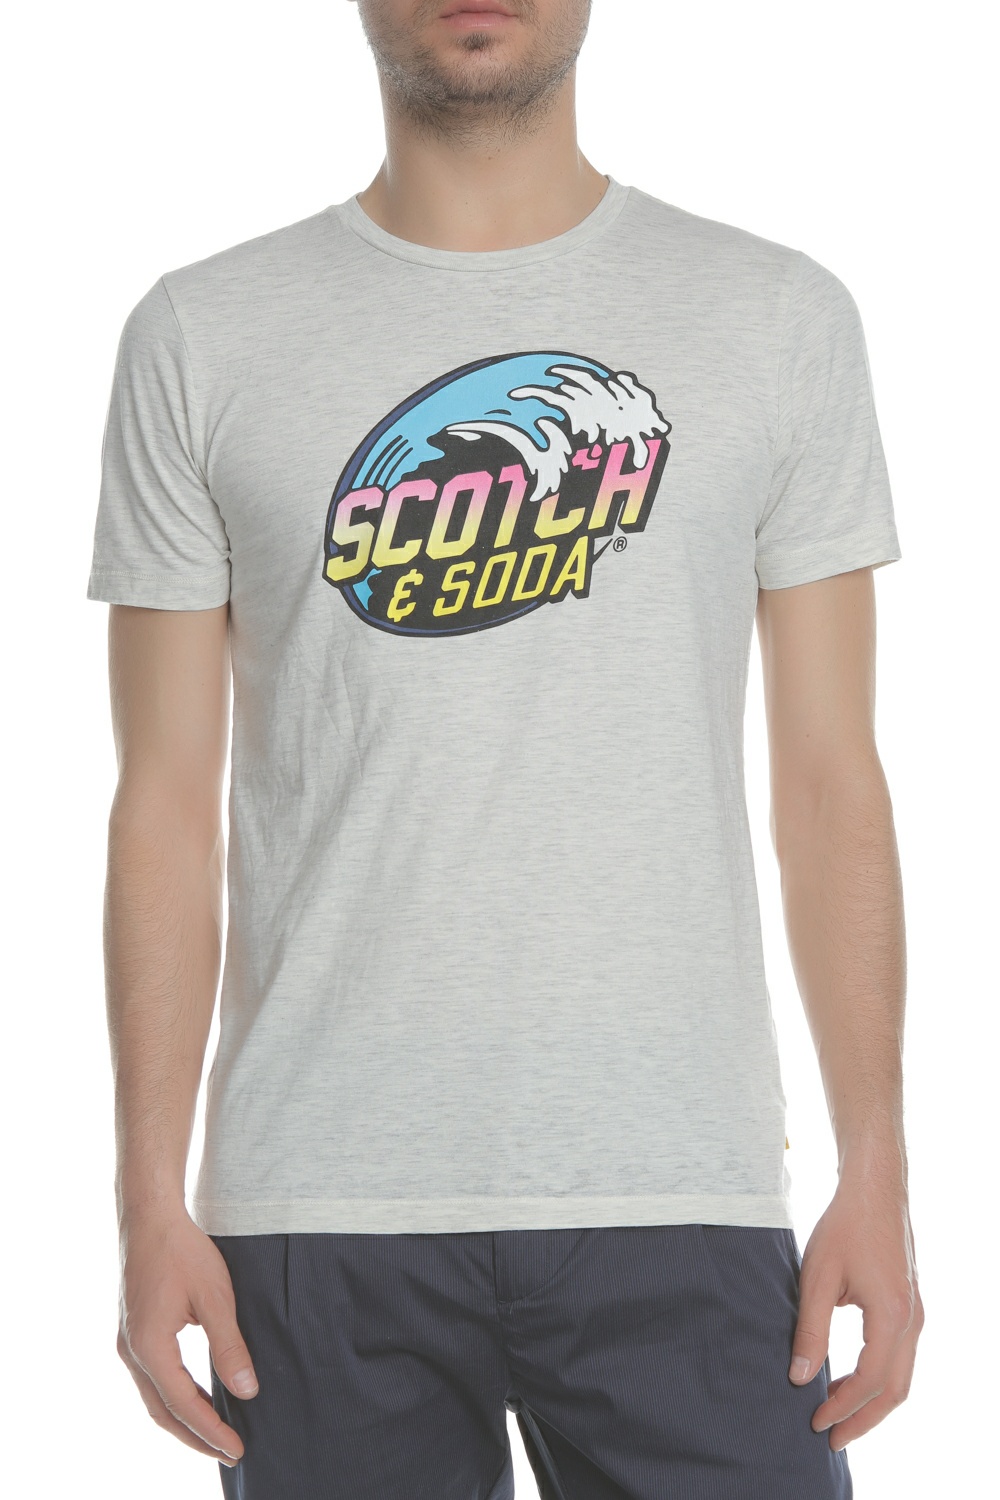 SCOTCH & SODA SCOTCH & SODA - Ανδρική μπλούζα Surf-inspired logo artwork tee γκρι-εκρού